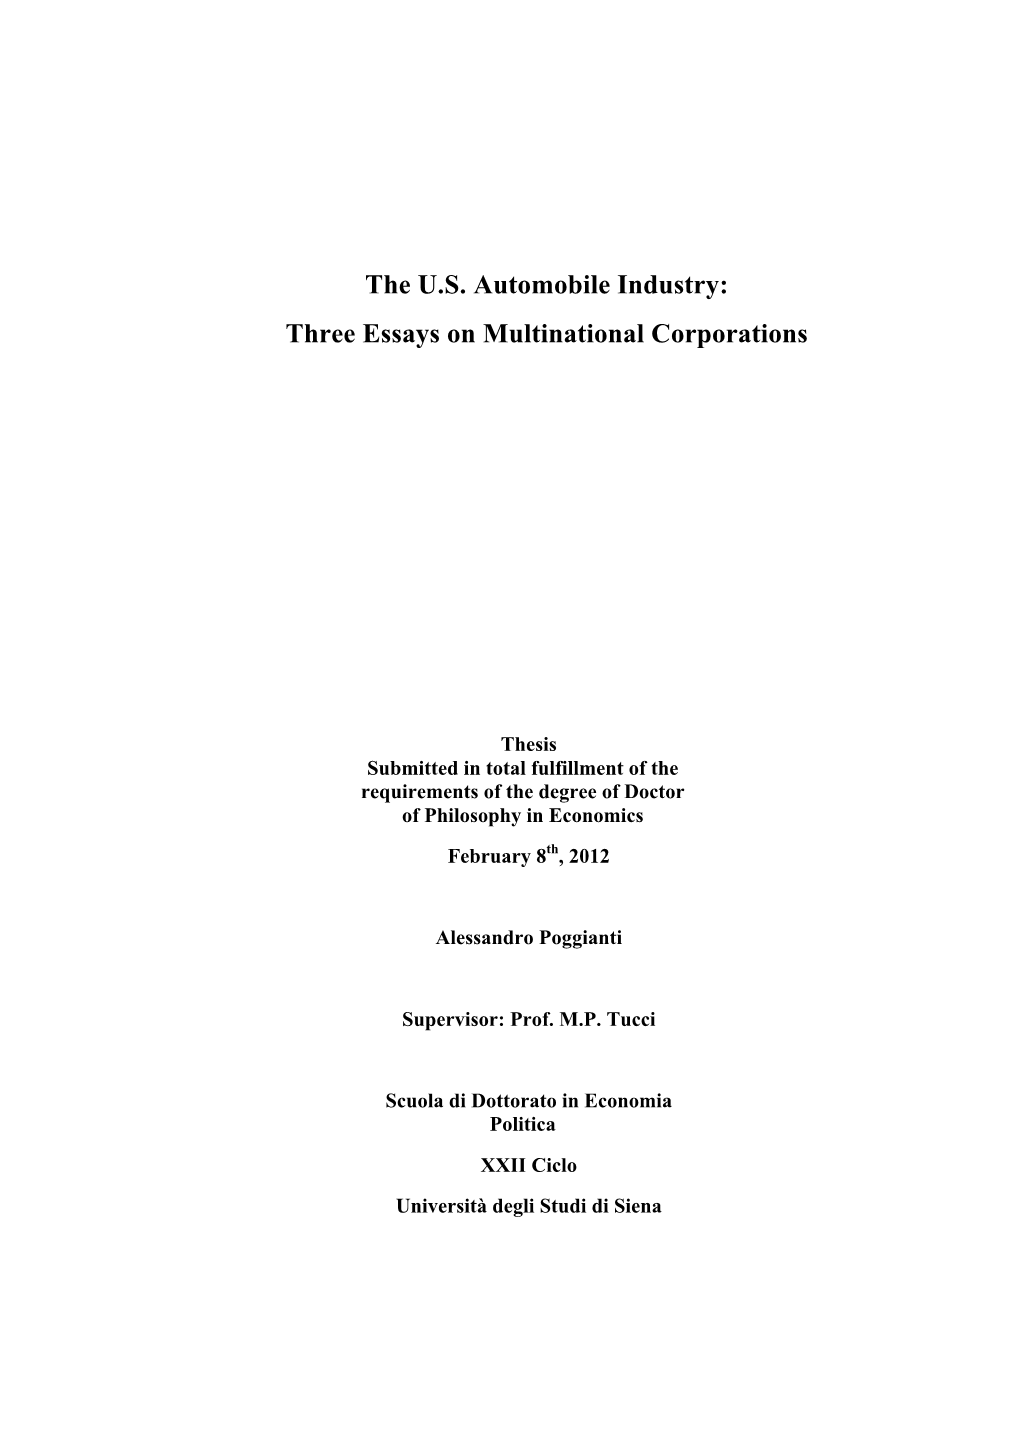 The U.S. Automobile Industry: Three Essays on Multinational Corporations